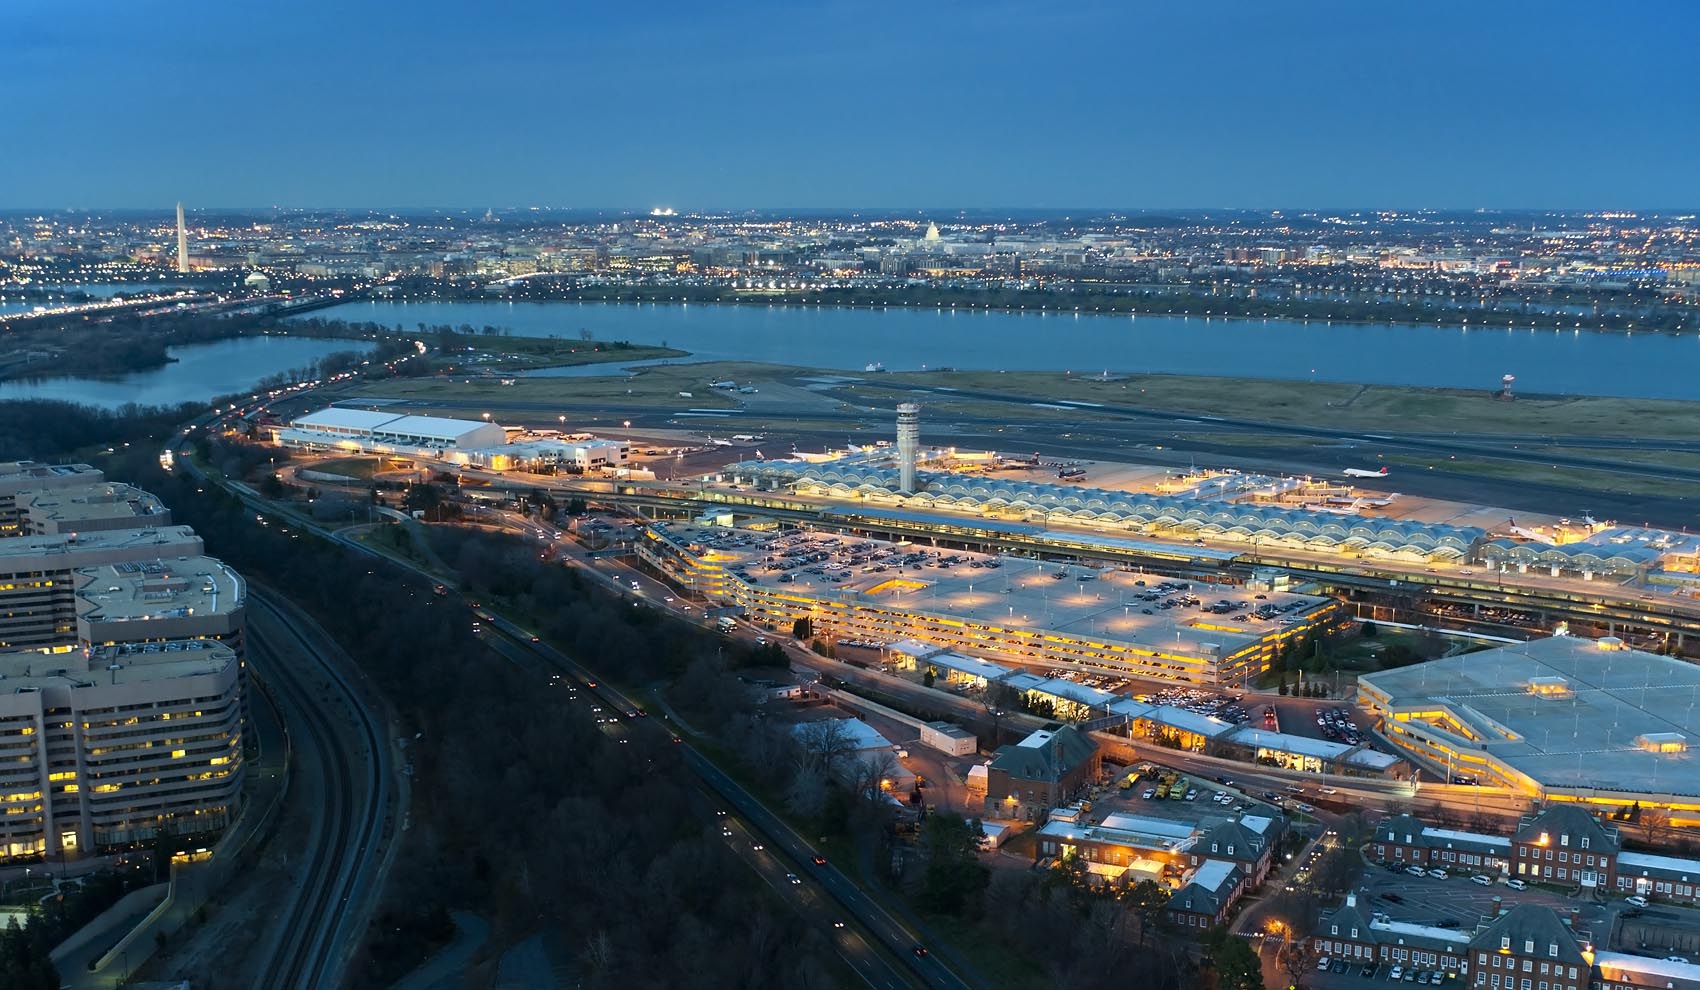 Washington National Airport twilight aerial image